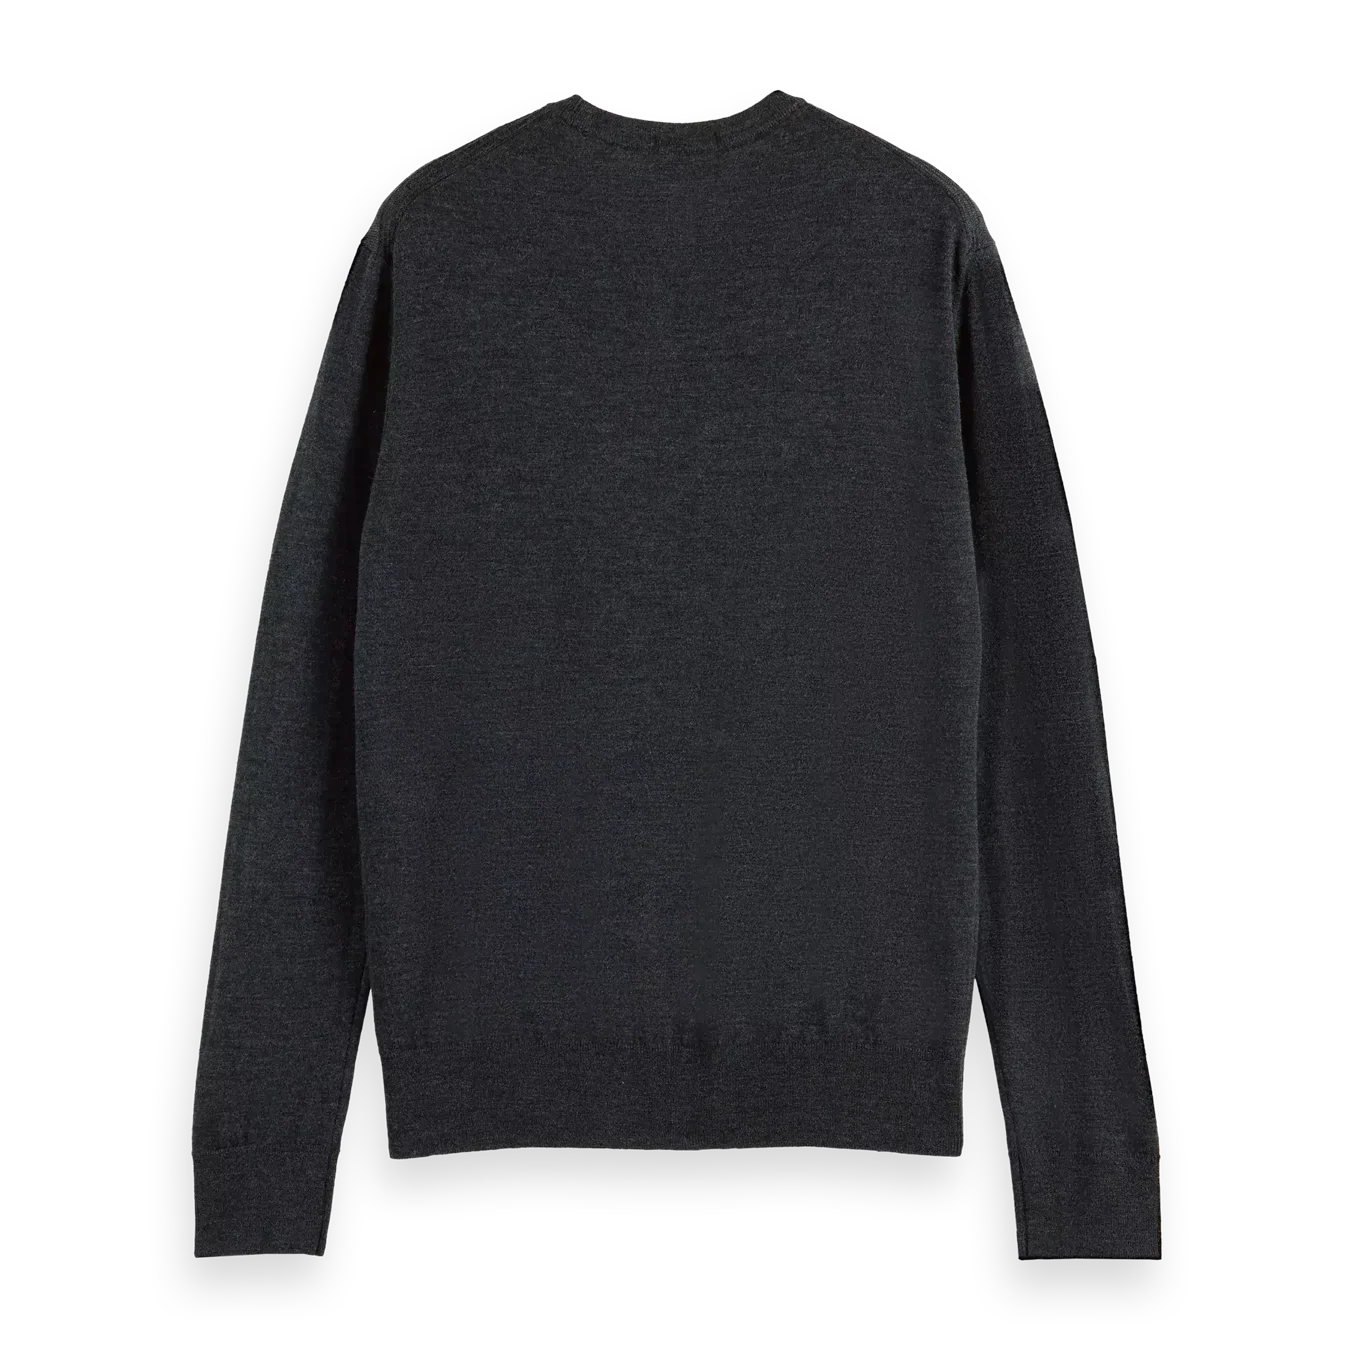 'Scotch & Soda Merino Wool Essential Crew Neck Sweater' in 'Graphite Melange' colour